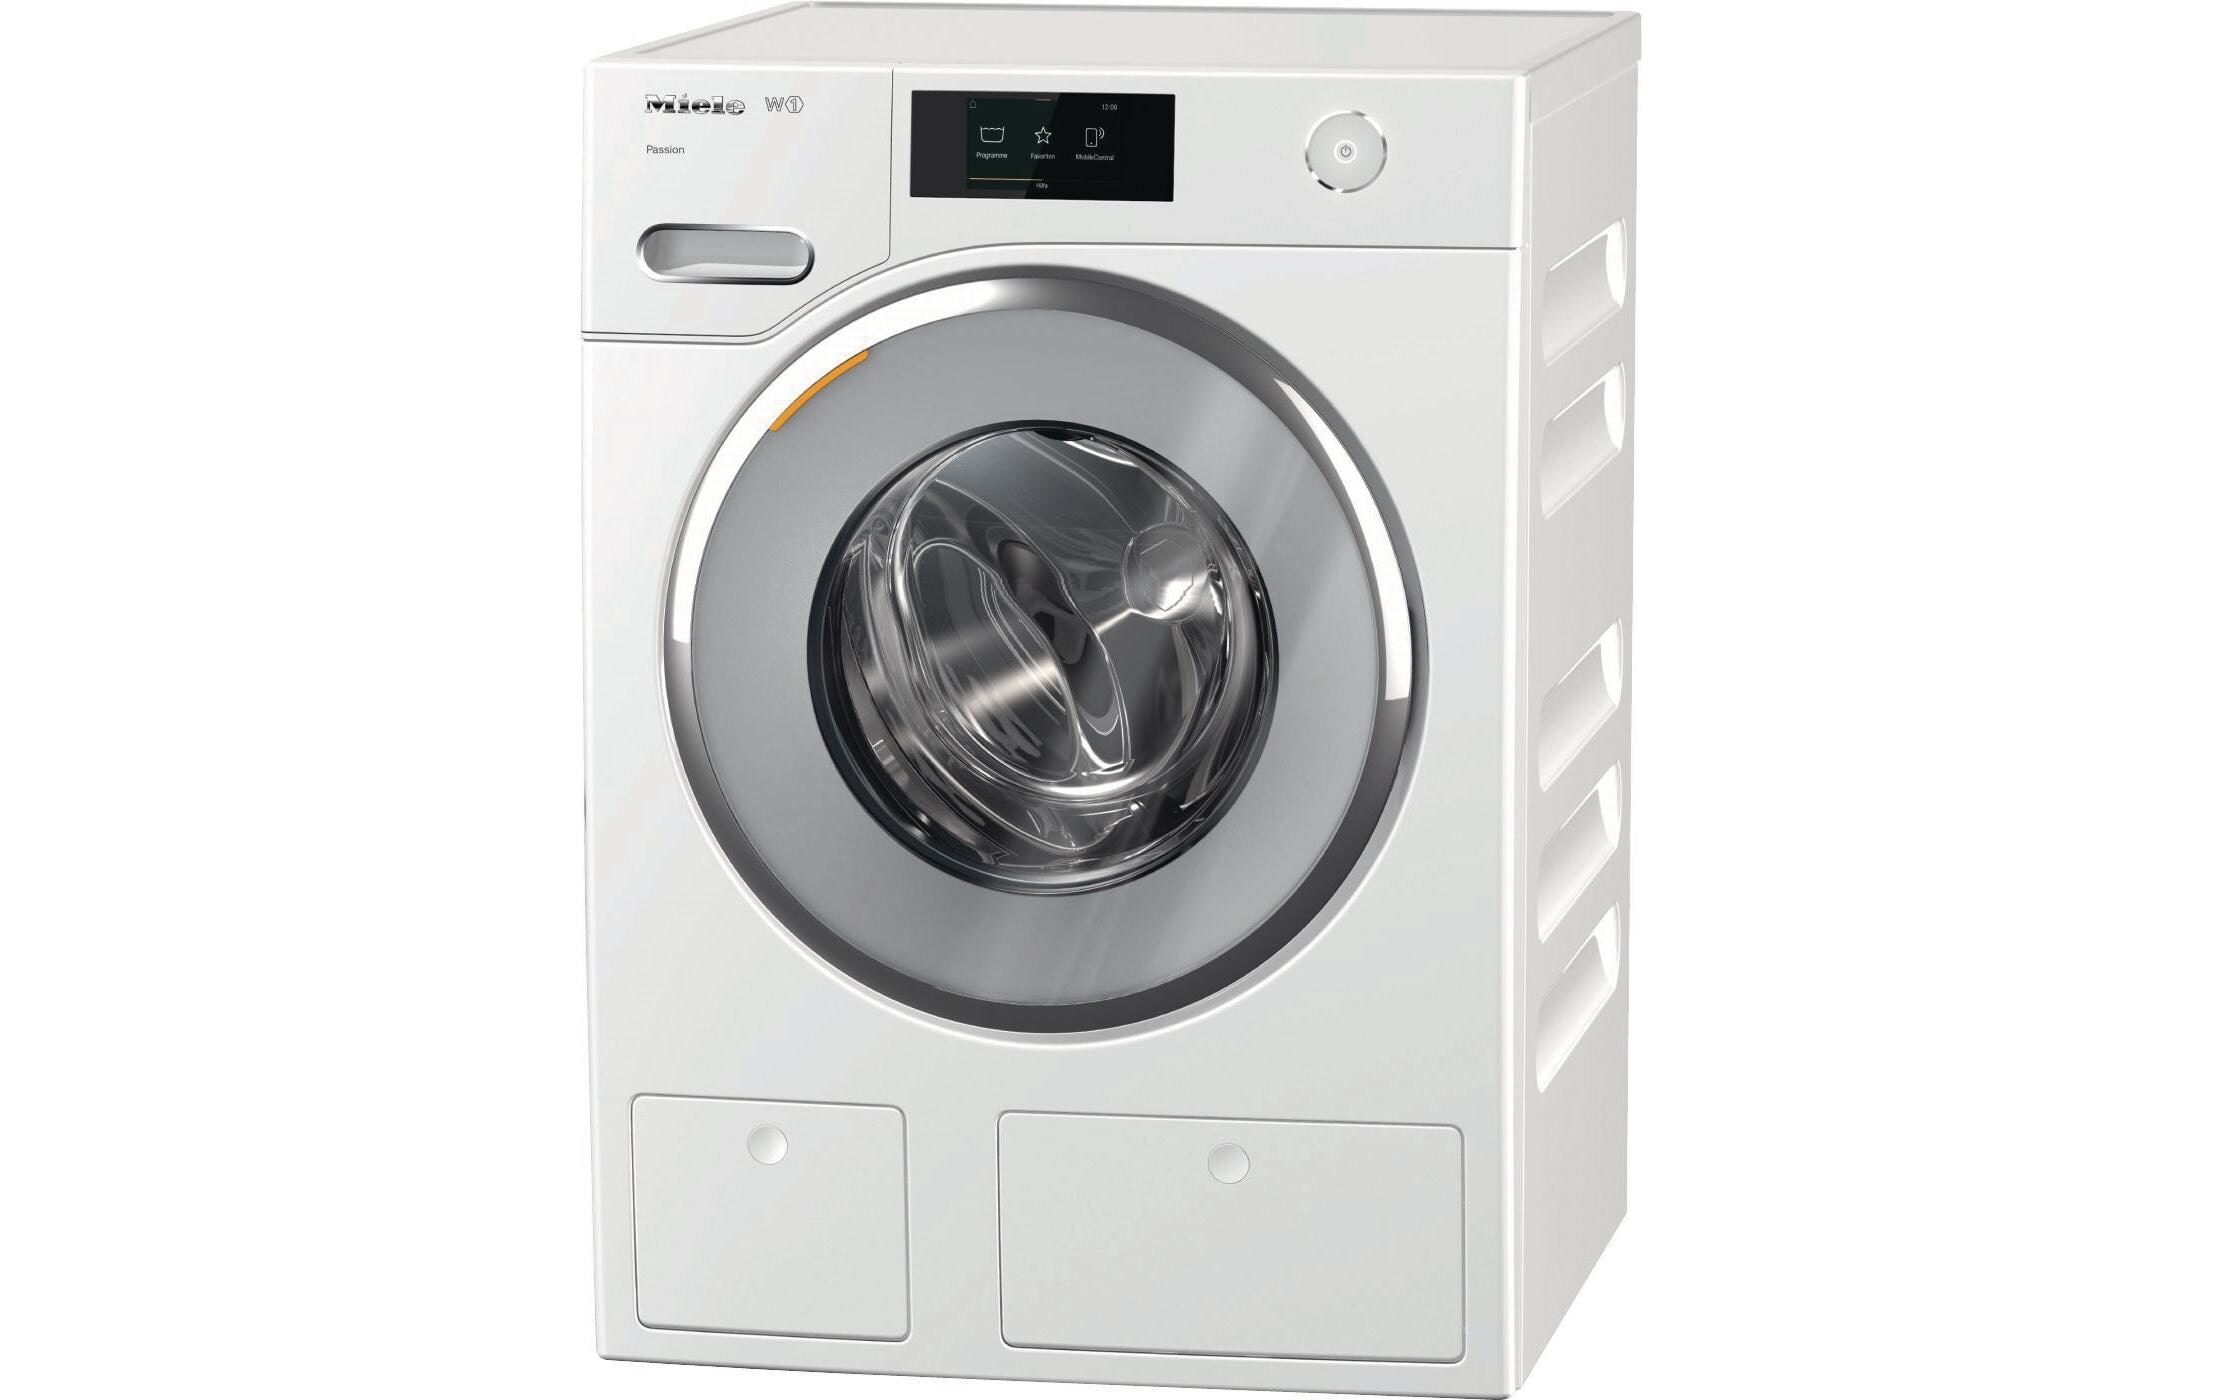 Waschmaschine, WWV 900-80, 9 kg, 1600 U/min